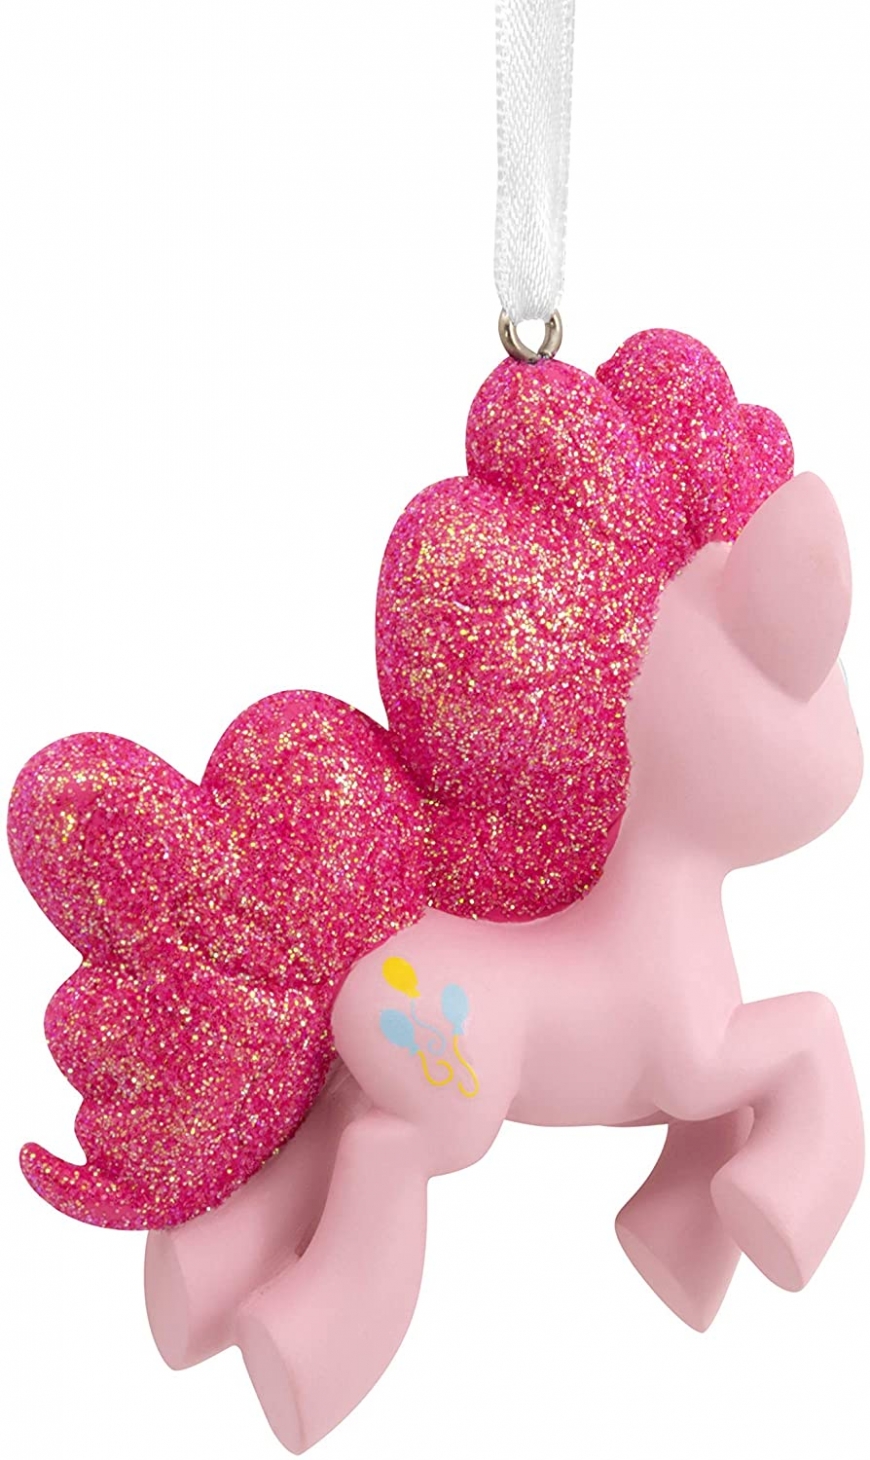 New My Little Pony Pinkie Pie 2020 Hallmark Christmas Ornament